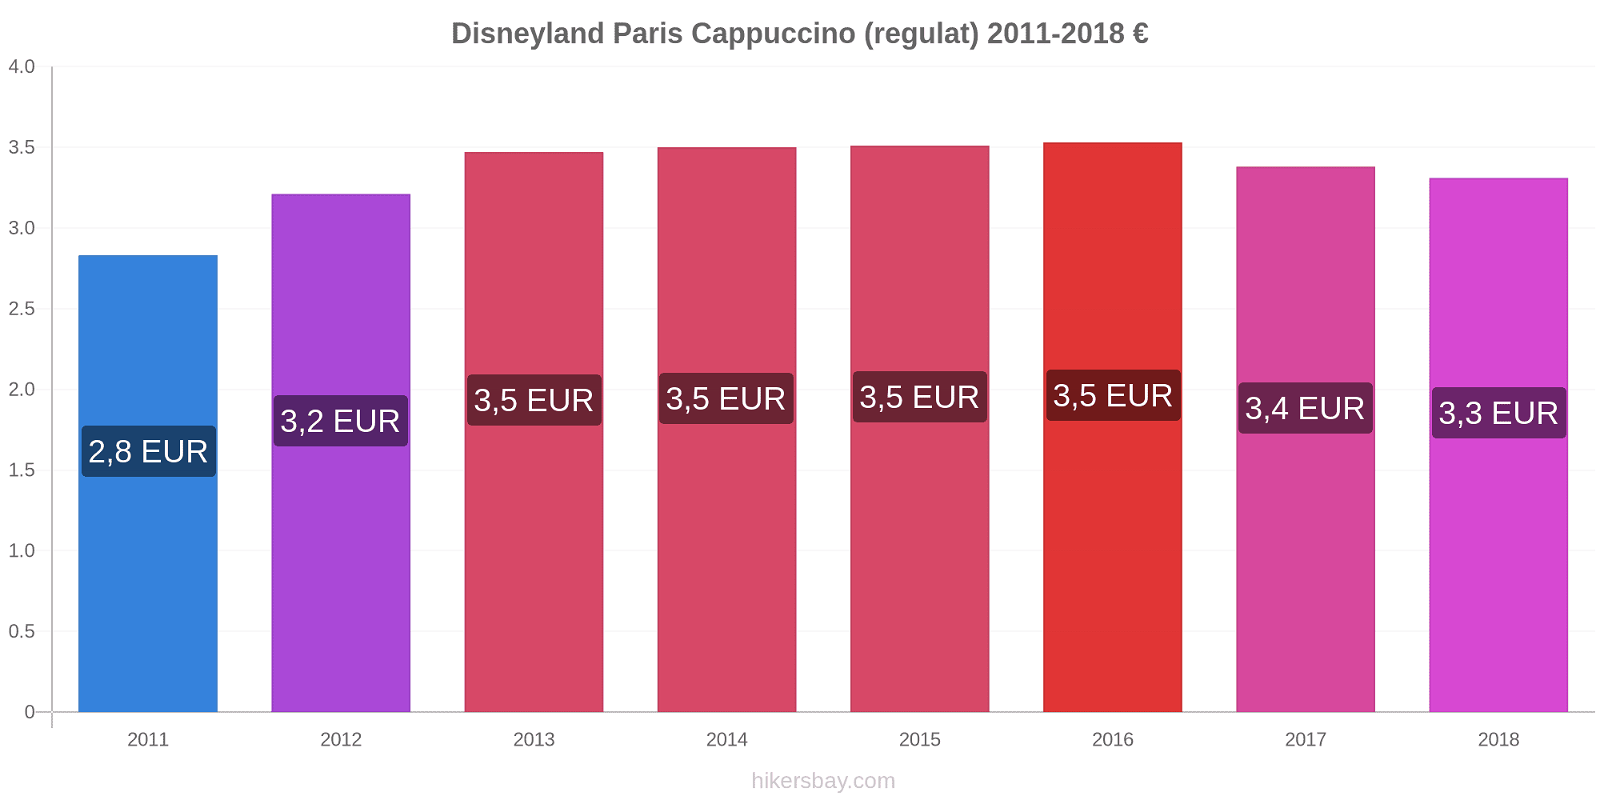 Disneyland Paris modificări de preț Cappuccino (regulat) hikersbay.com